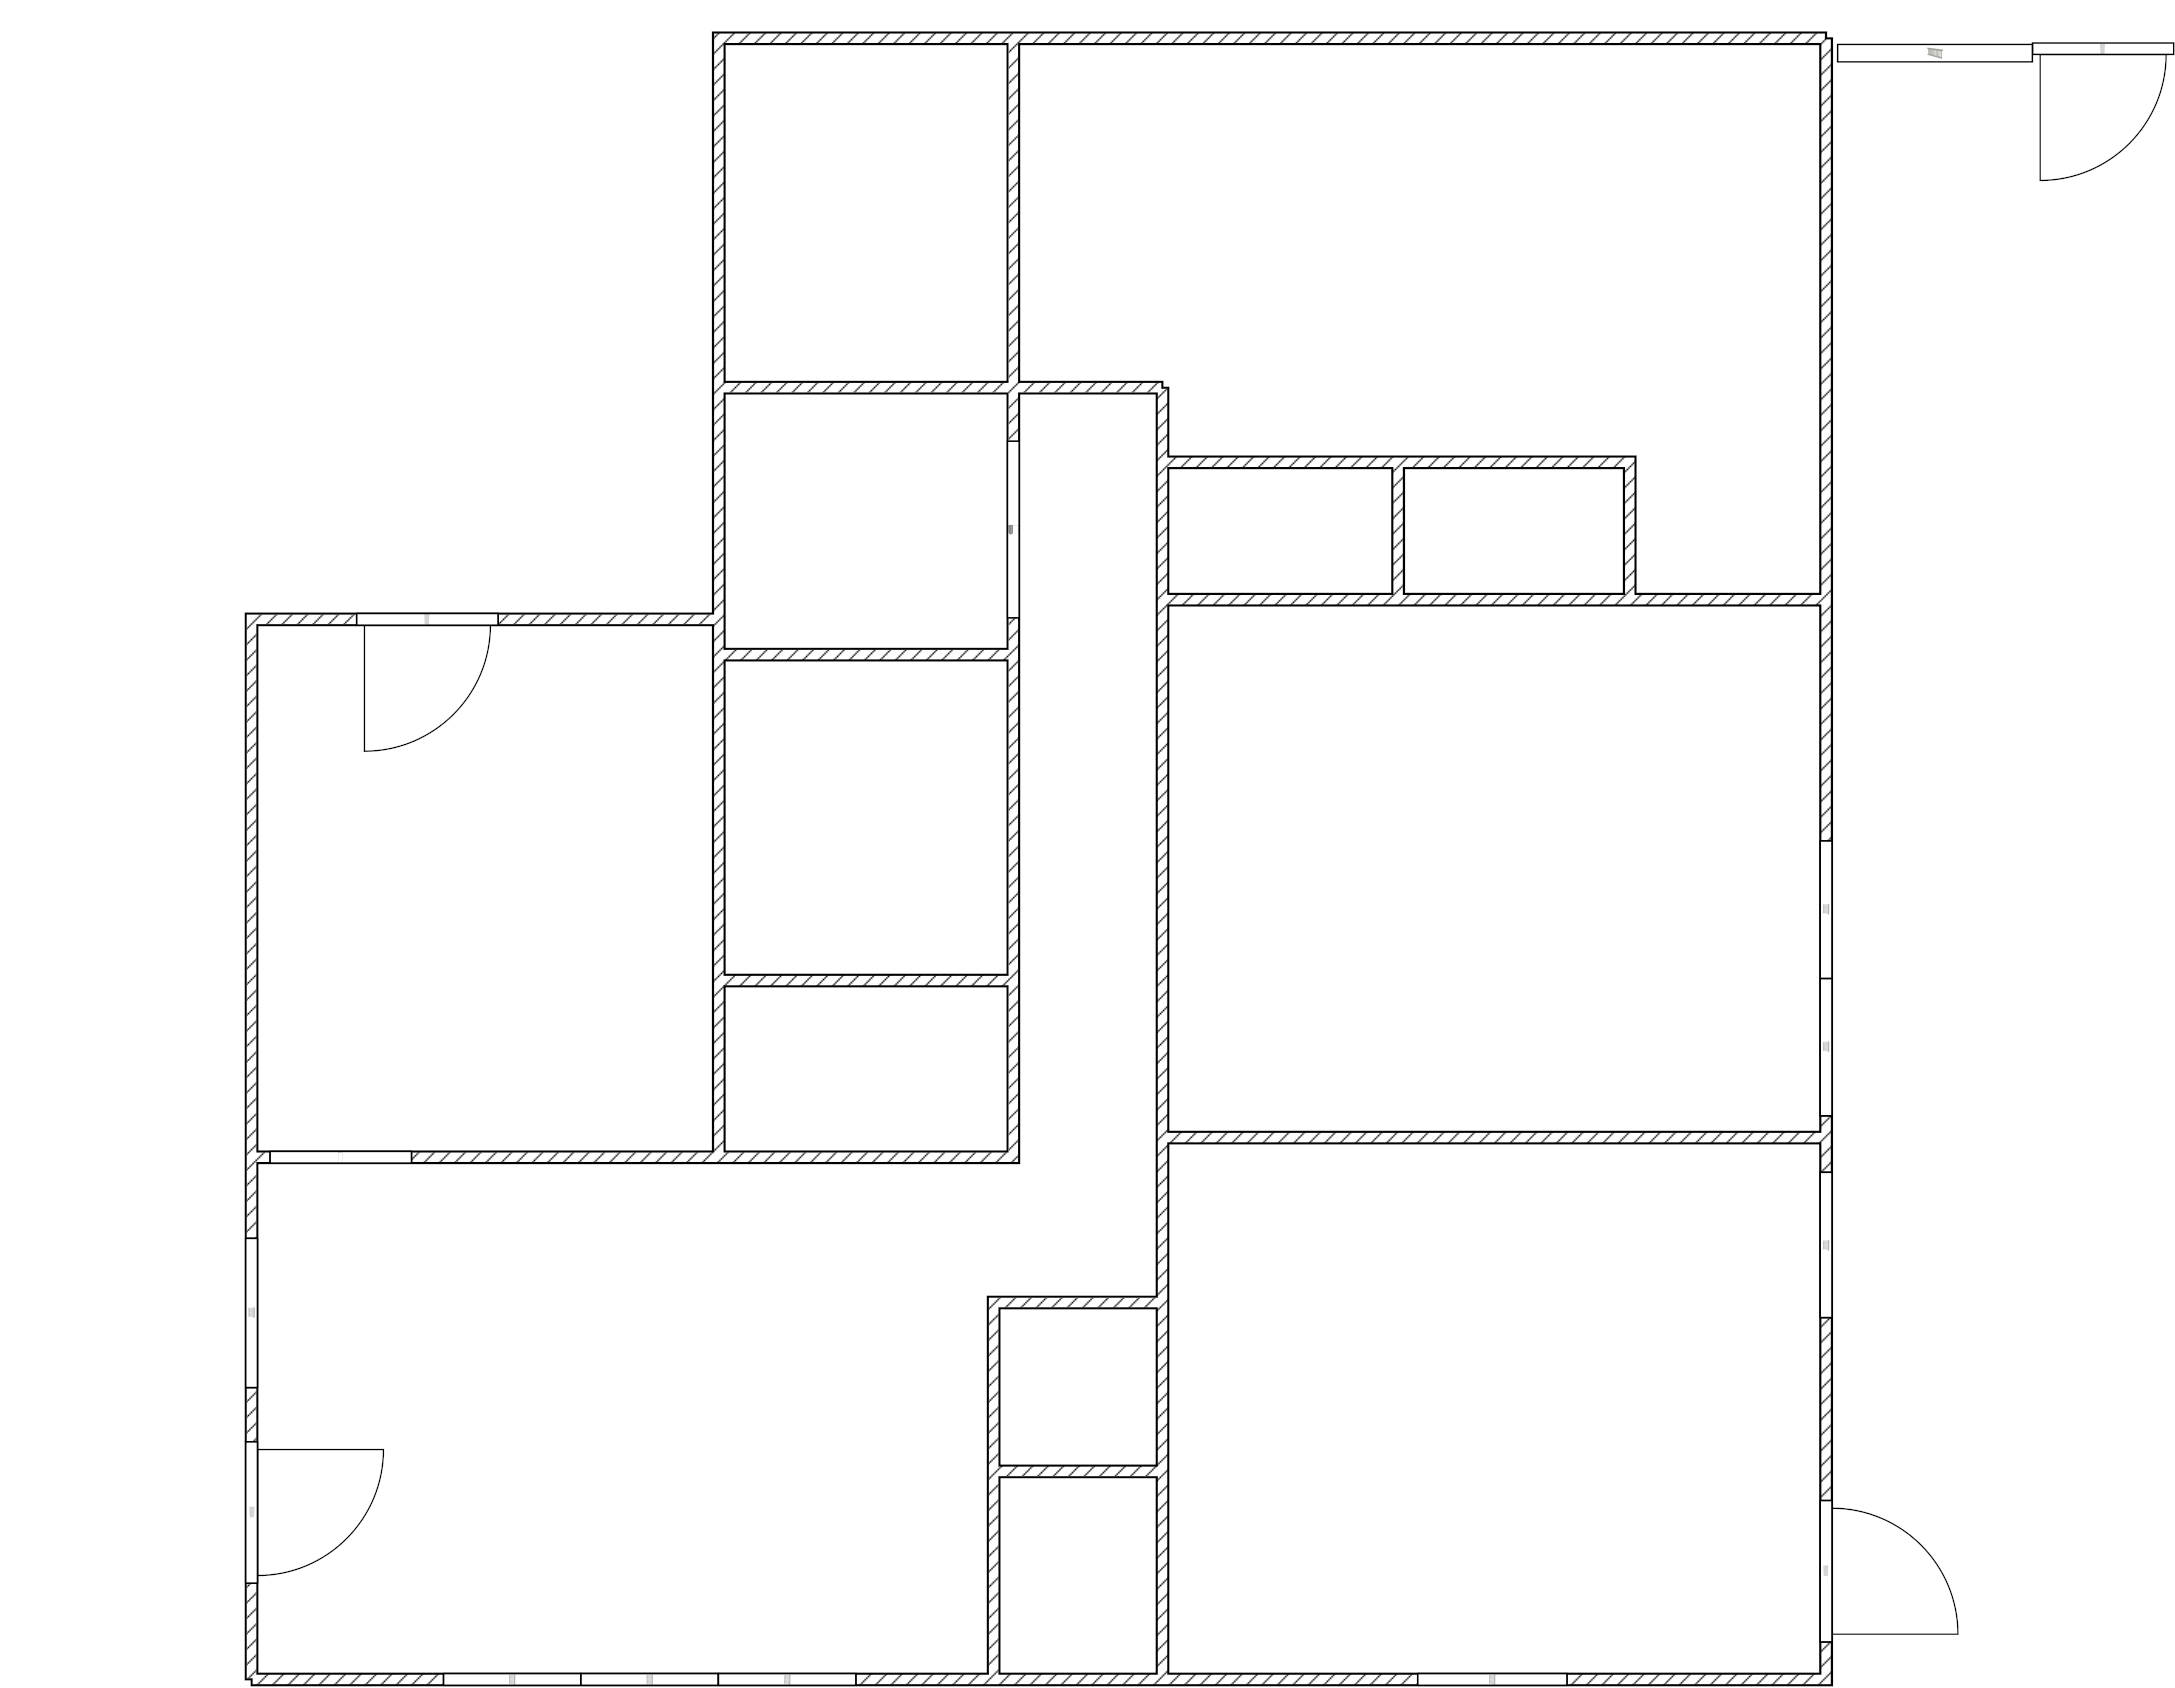 example floorplan image